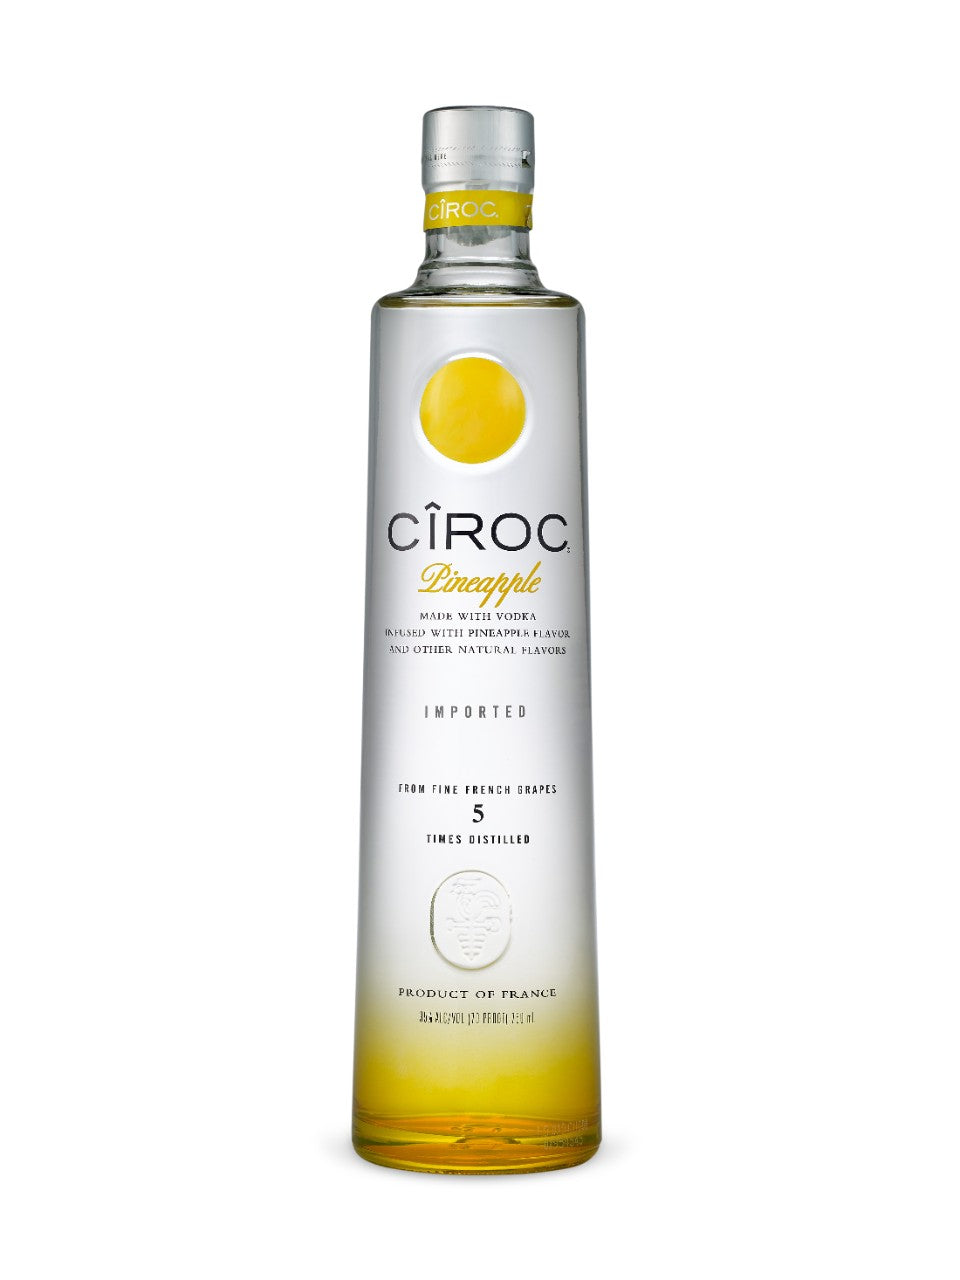 Ciroc Pineapple Vodka 750 mL bottle